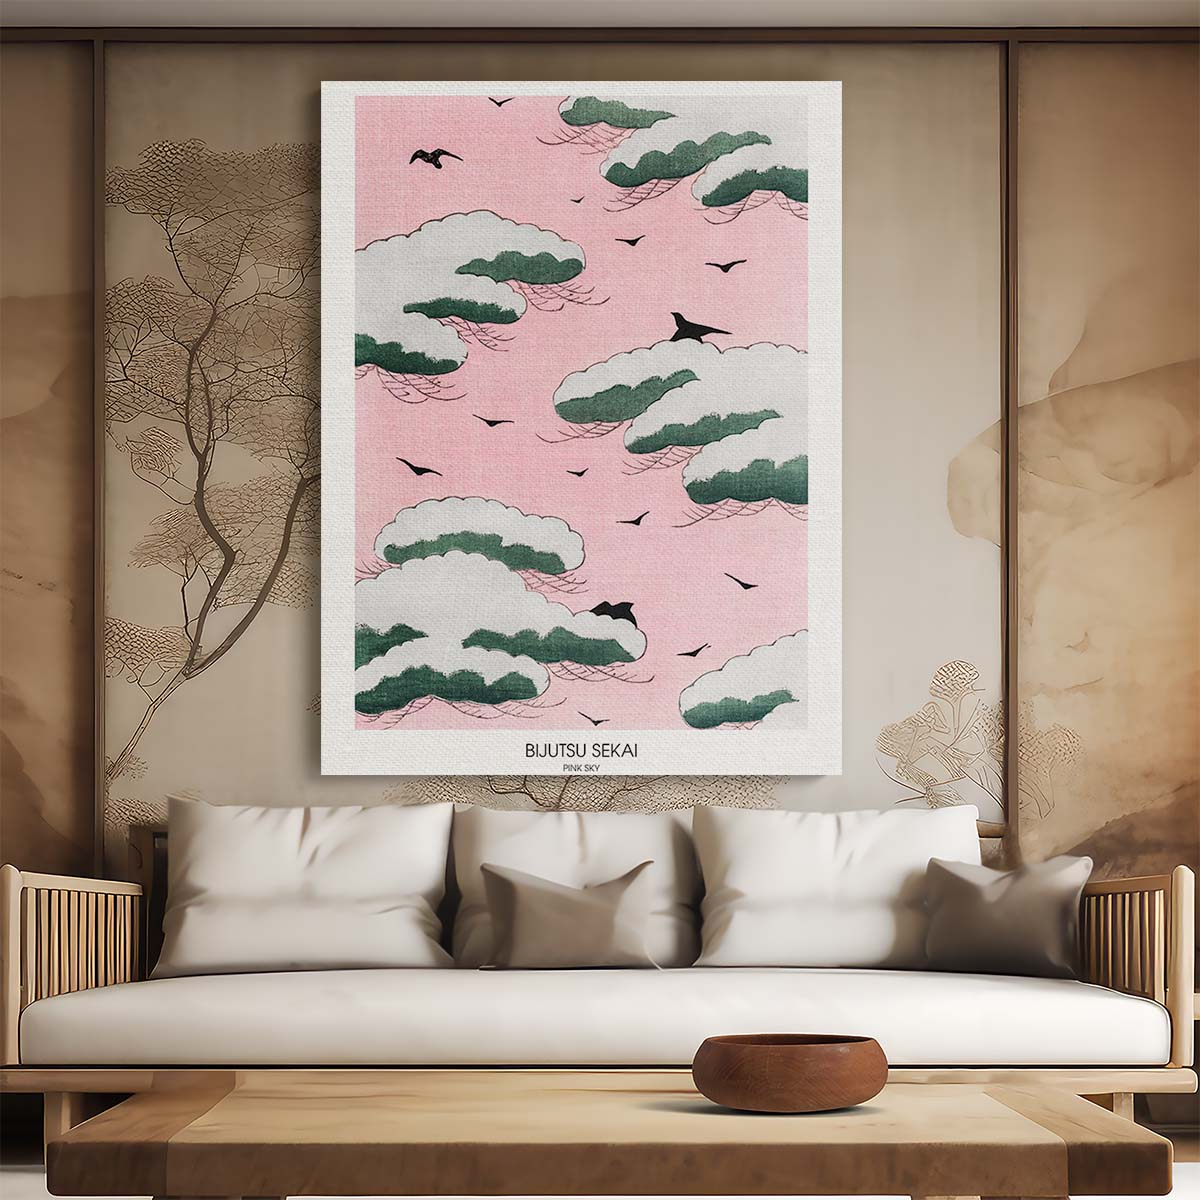 Vintage Pink Sky Illustration Poster by Bijutsu Sekai, Ukiyo-e Style by Luxuriance Designs, made in USA